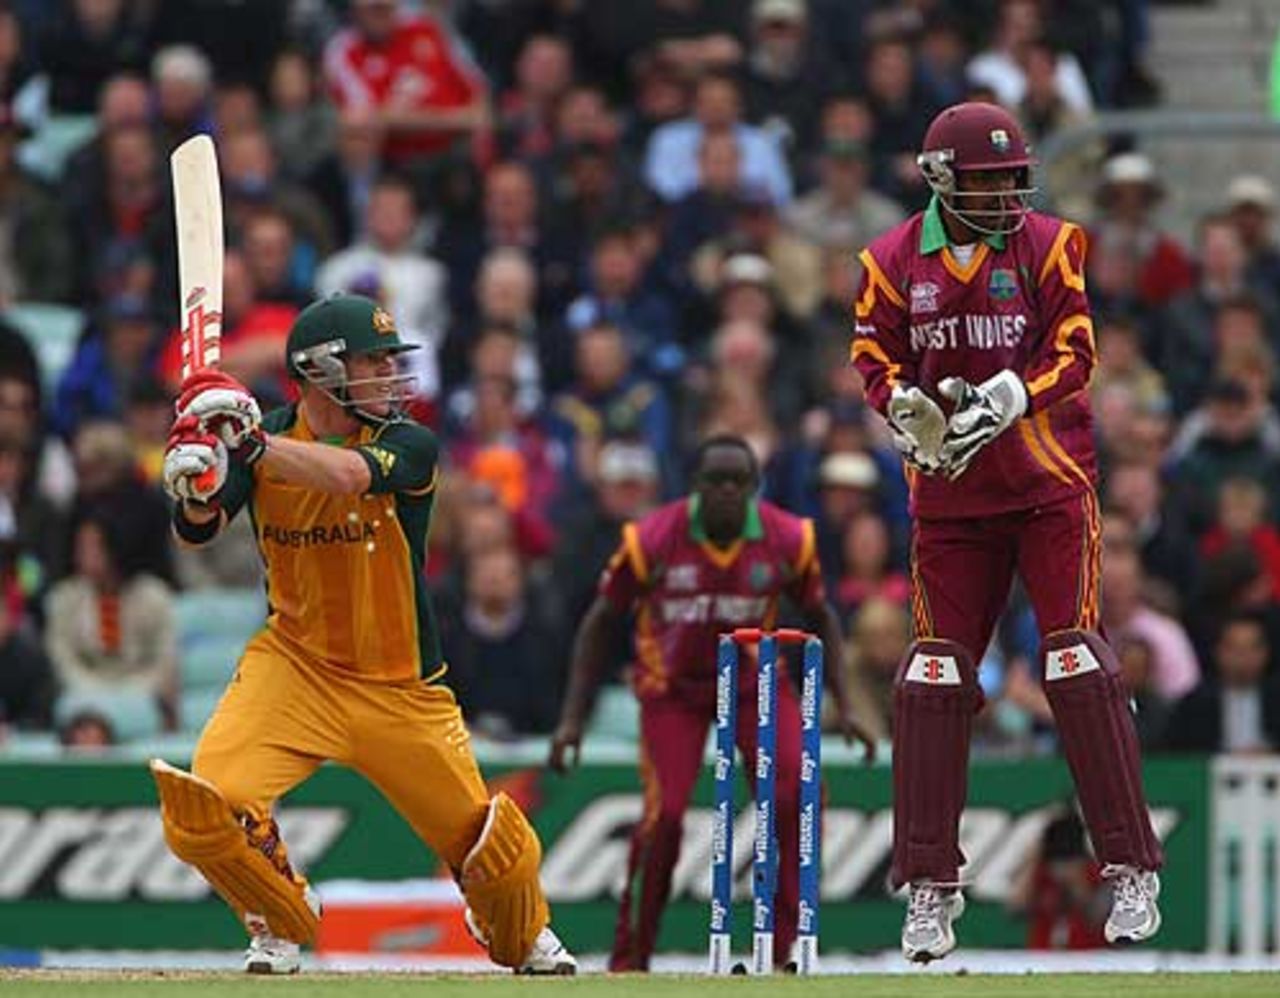 David Warner cuts one square on the off side, Australia v West Indies, ICC World Twenty20, The Oval, June 6, 2009